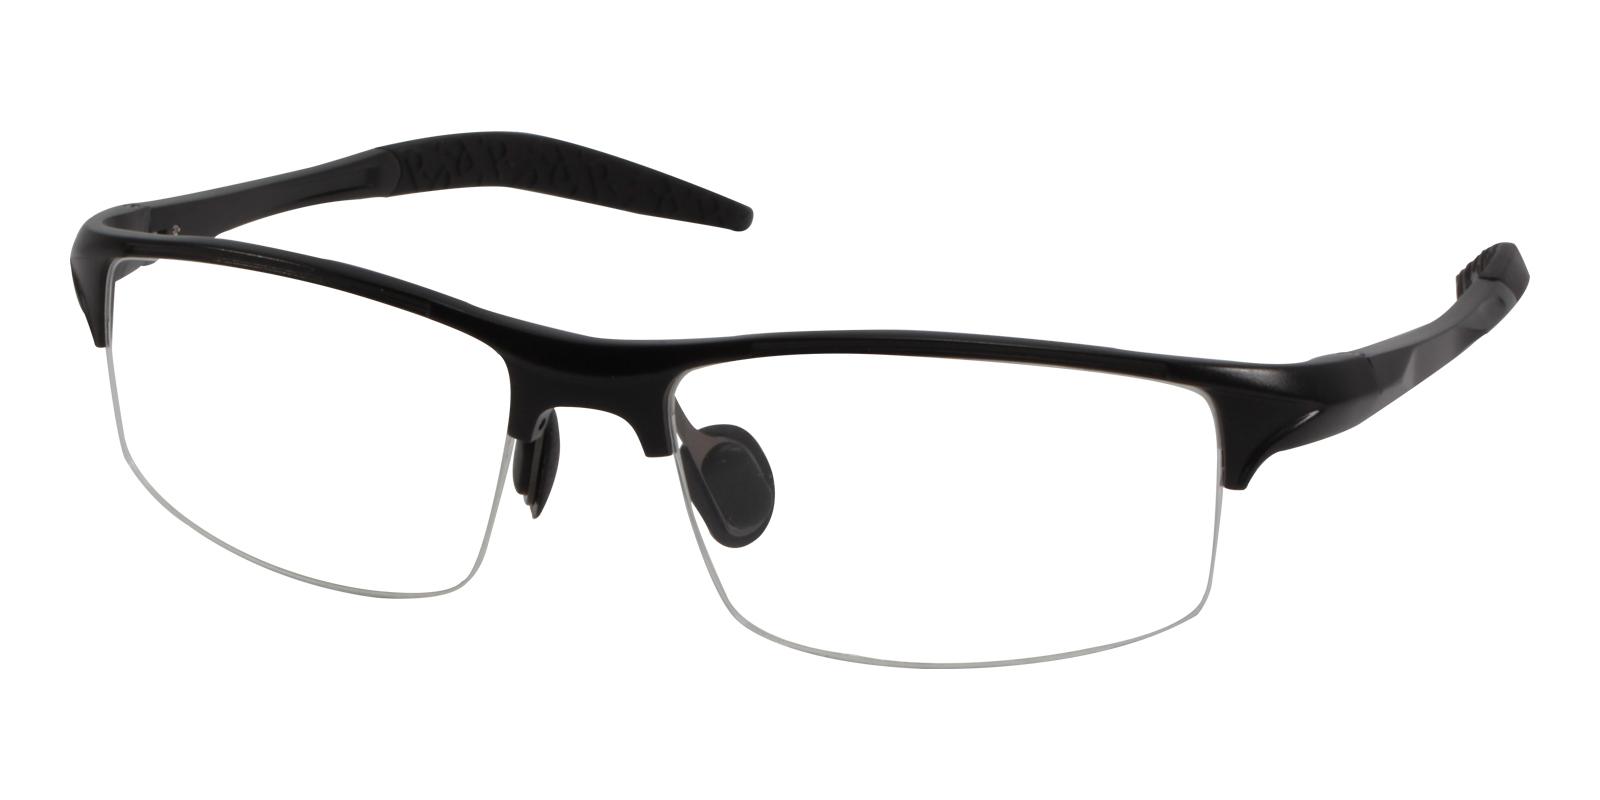 Pathfinder Black Metal NosePads , SportsGlasses , SpringHinges Frames from ABBE Glasses